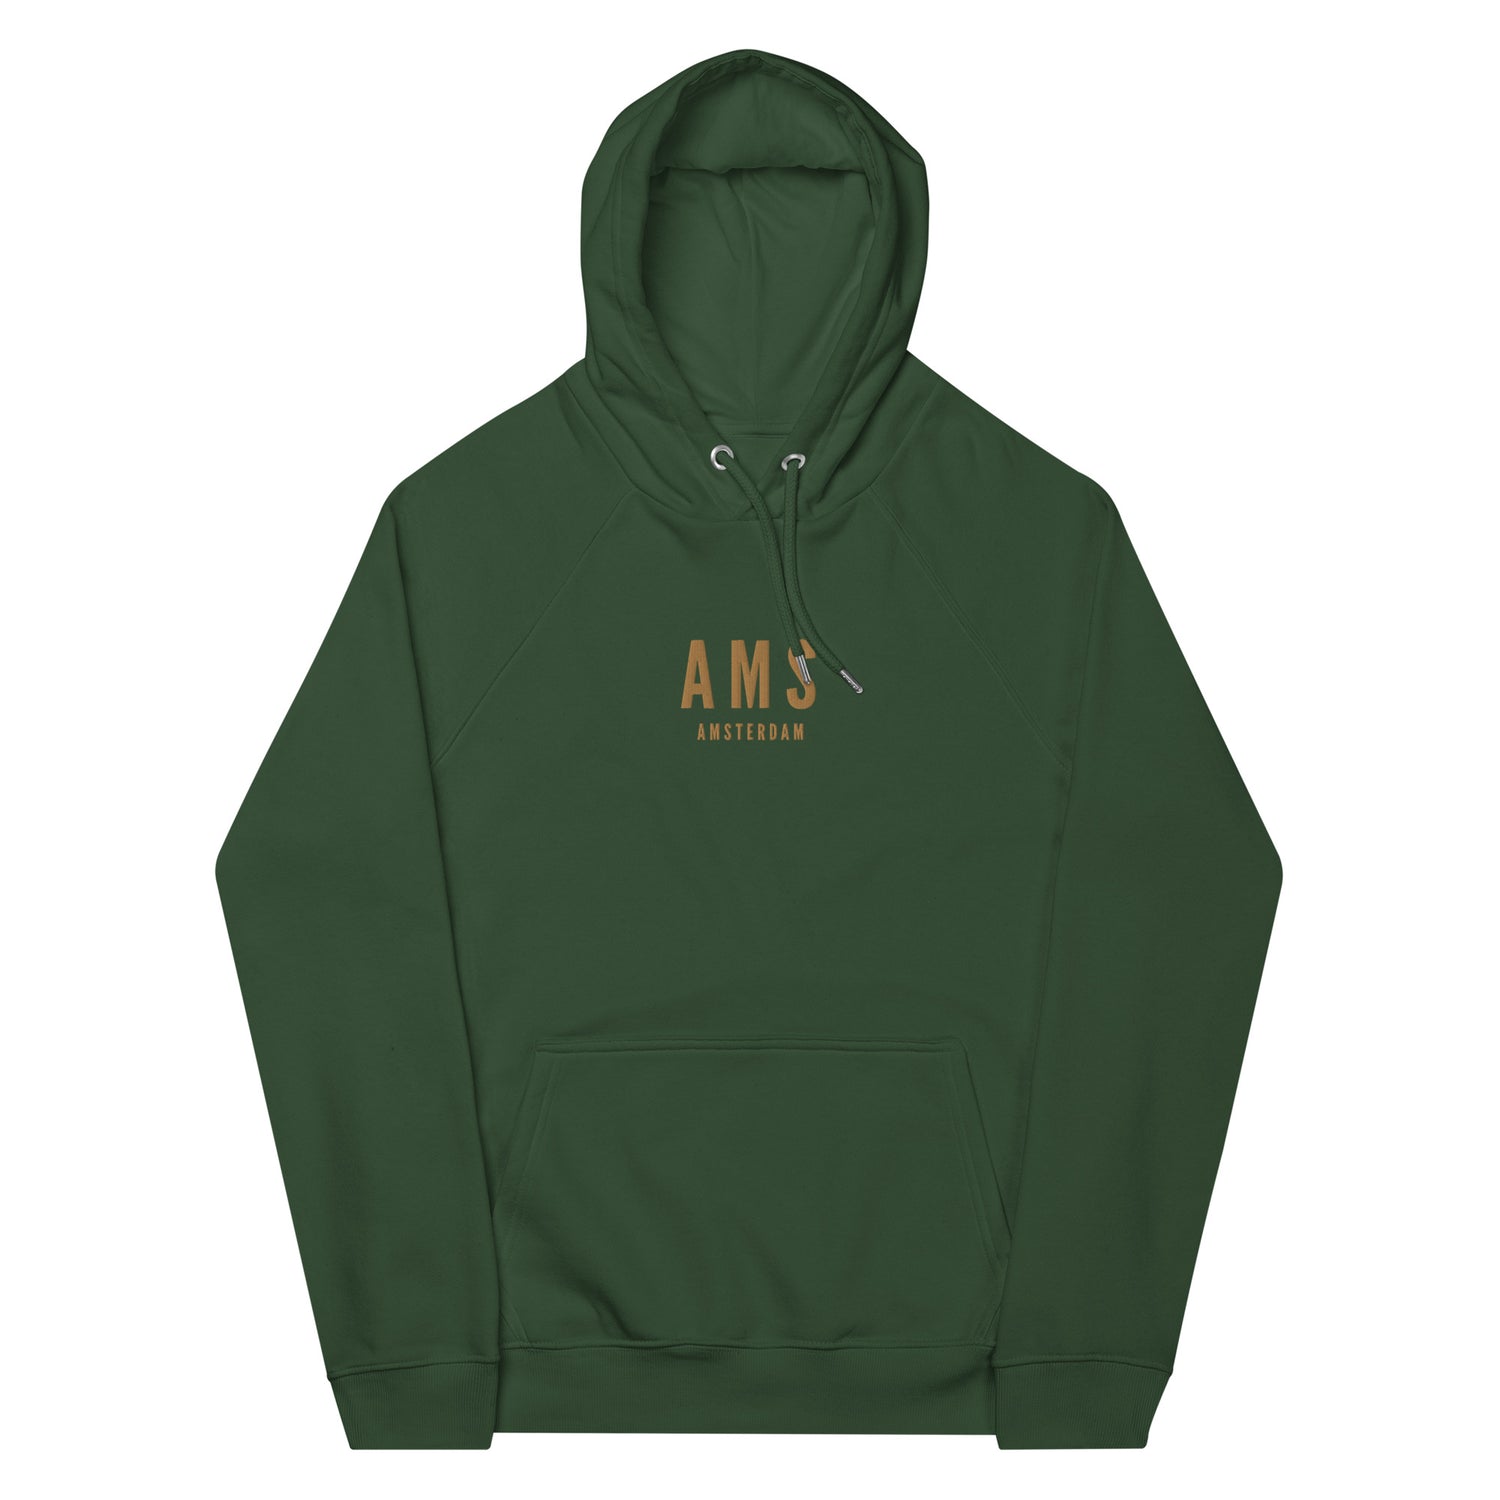 Amsterdam Netherlands Hoodies and Sweatshirts • AMS Airport Code